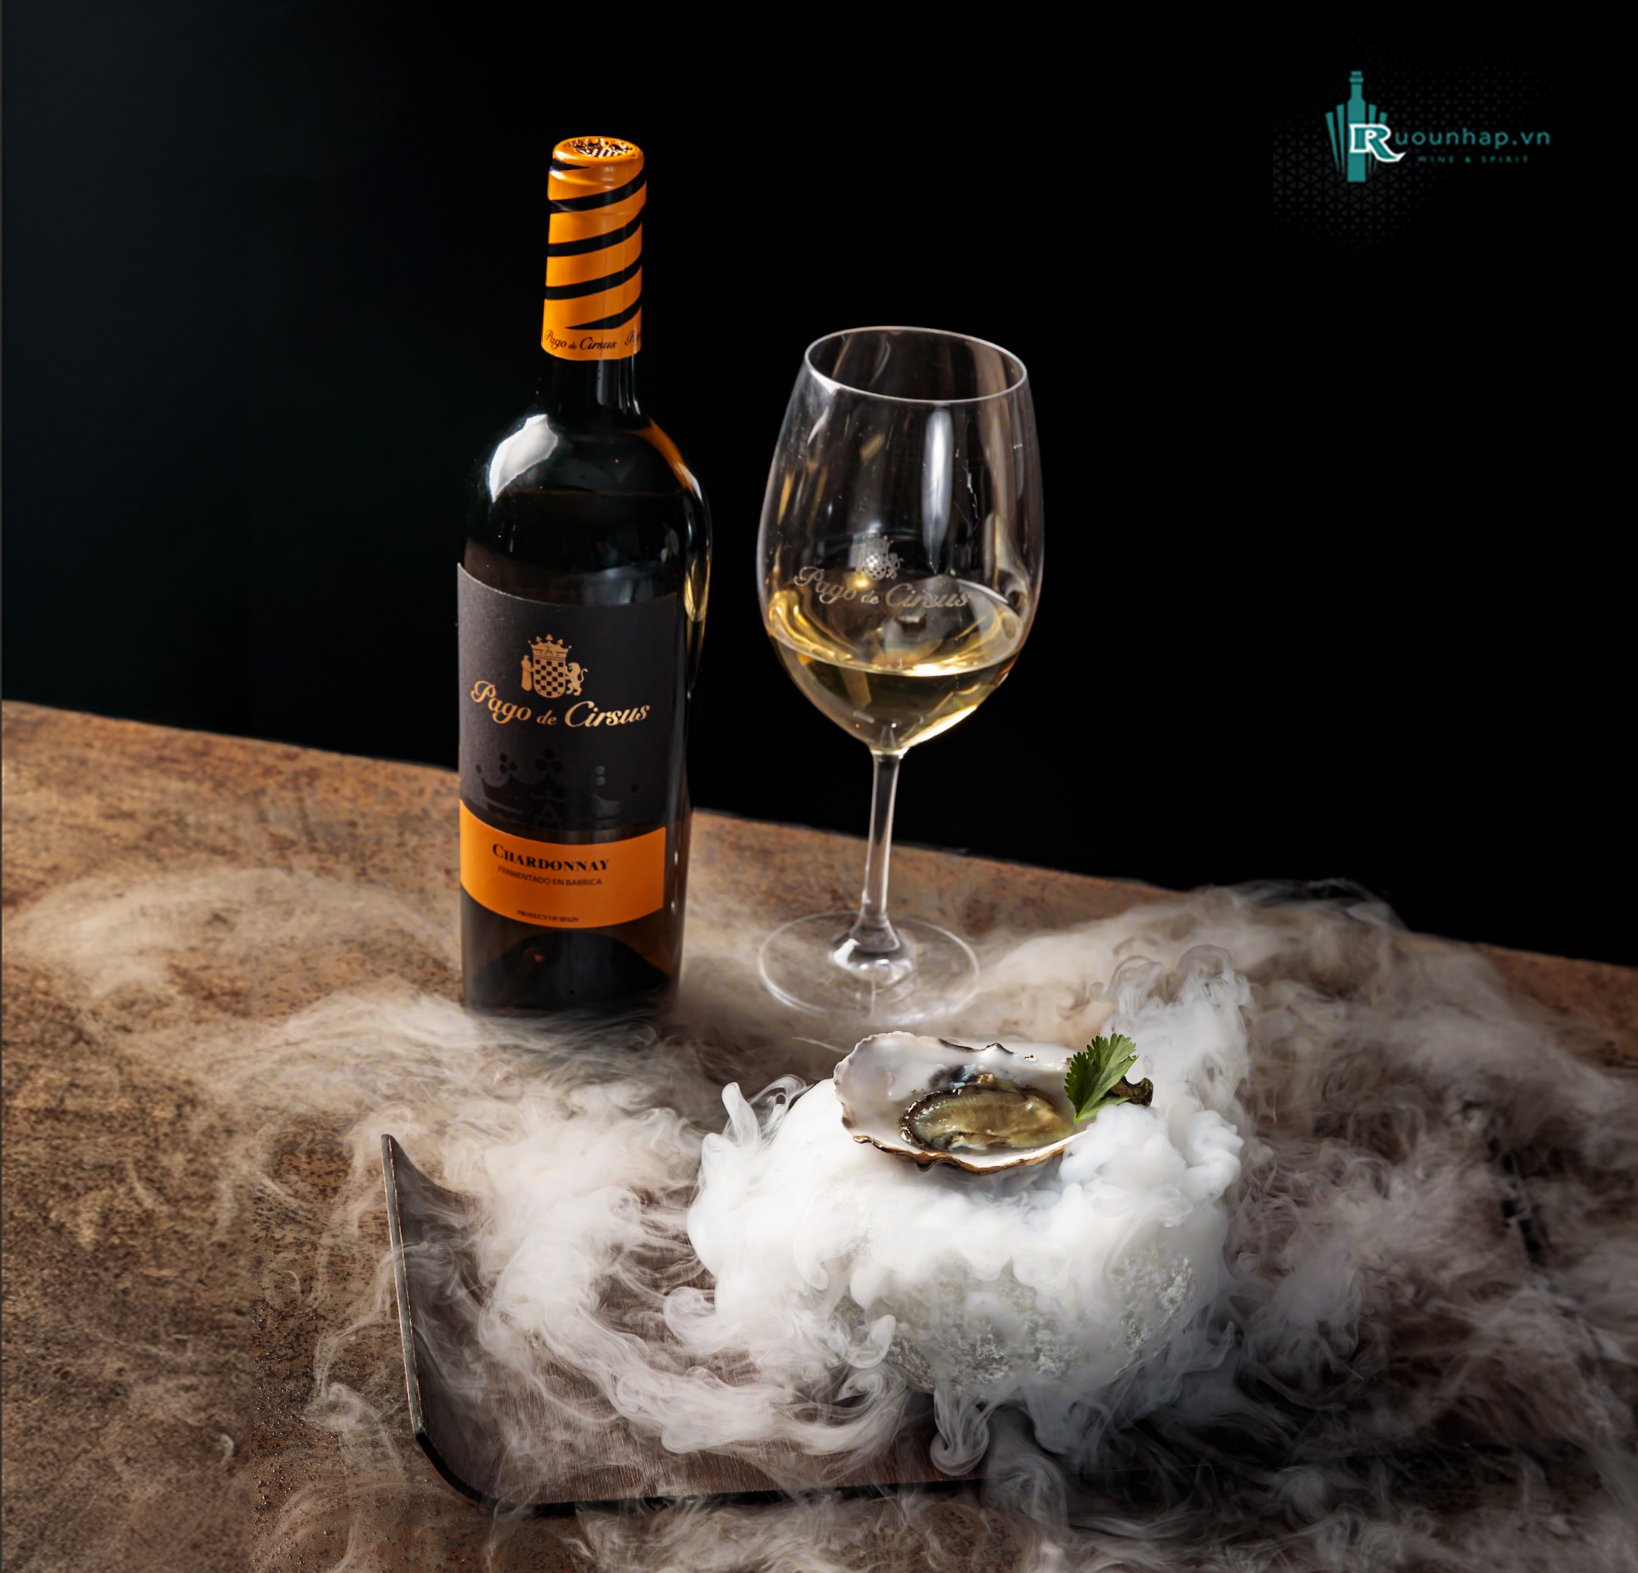 Rượu Vang Pago de Cirsus Chardonnay Fermentado en Barrica